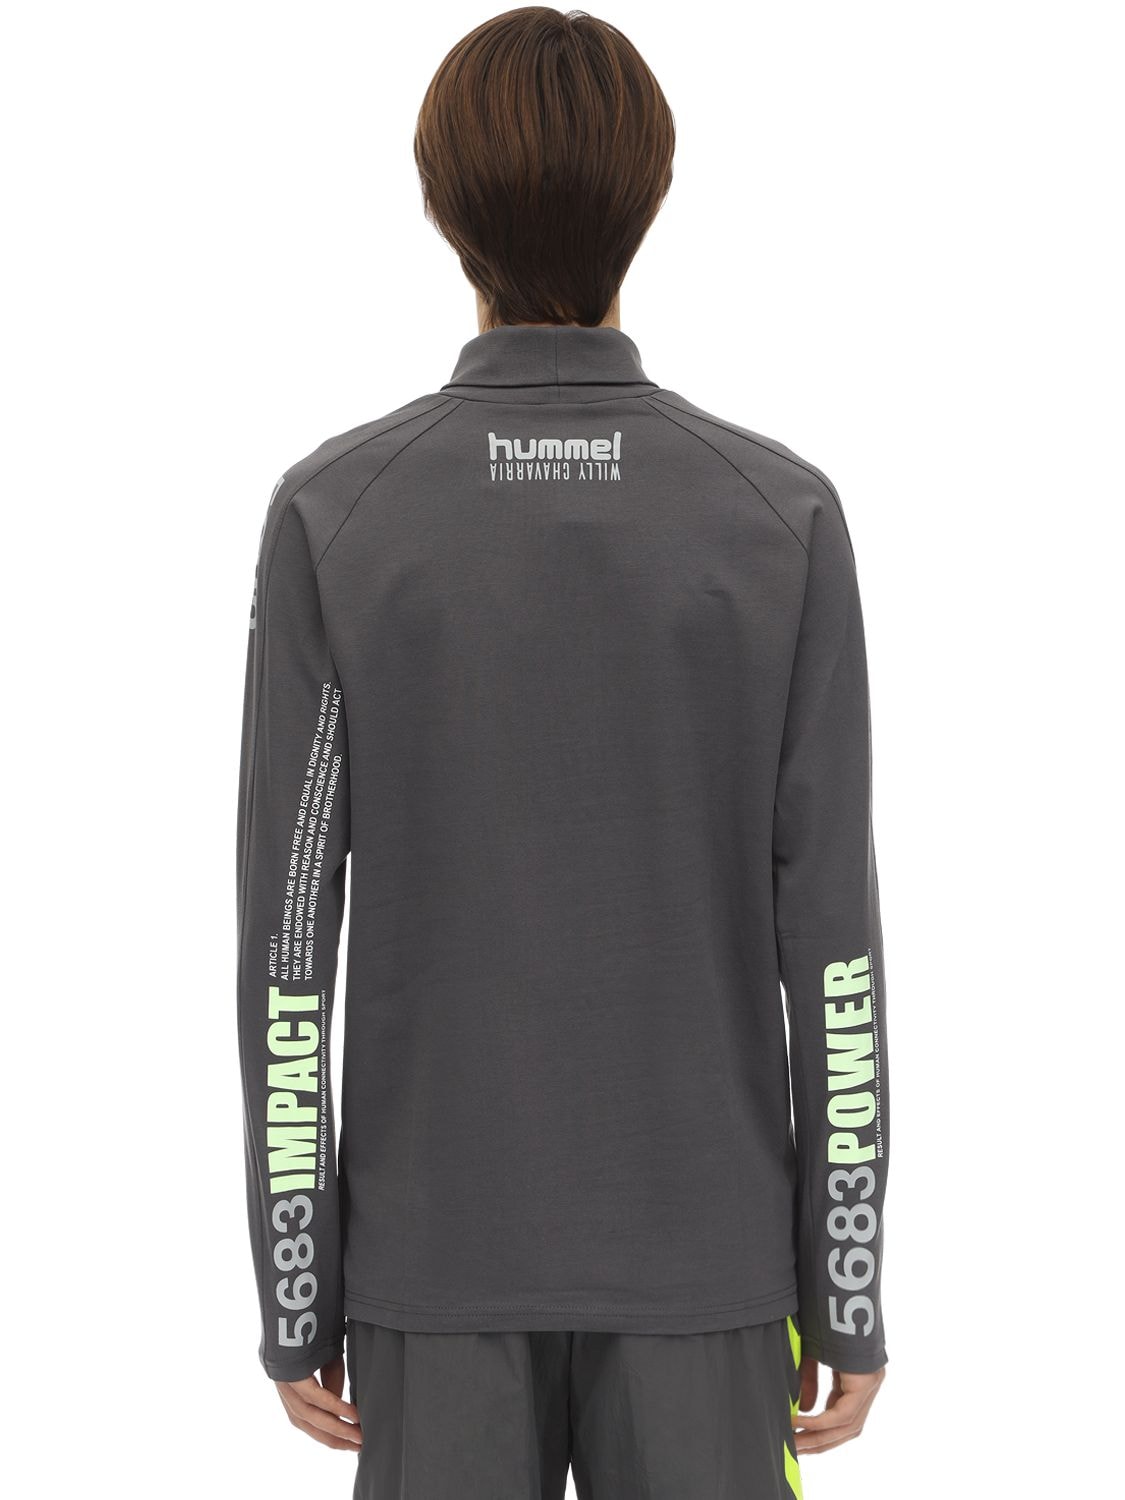 Hummel Willy Chavarria L/s Turtleneck T-shirt In Dark Grey